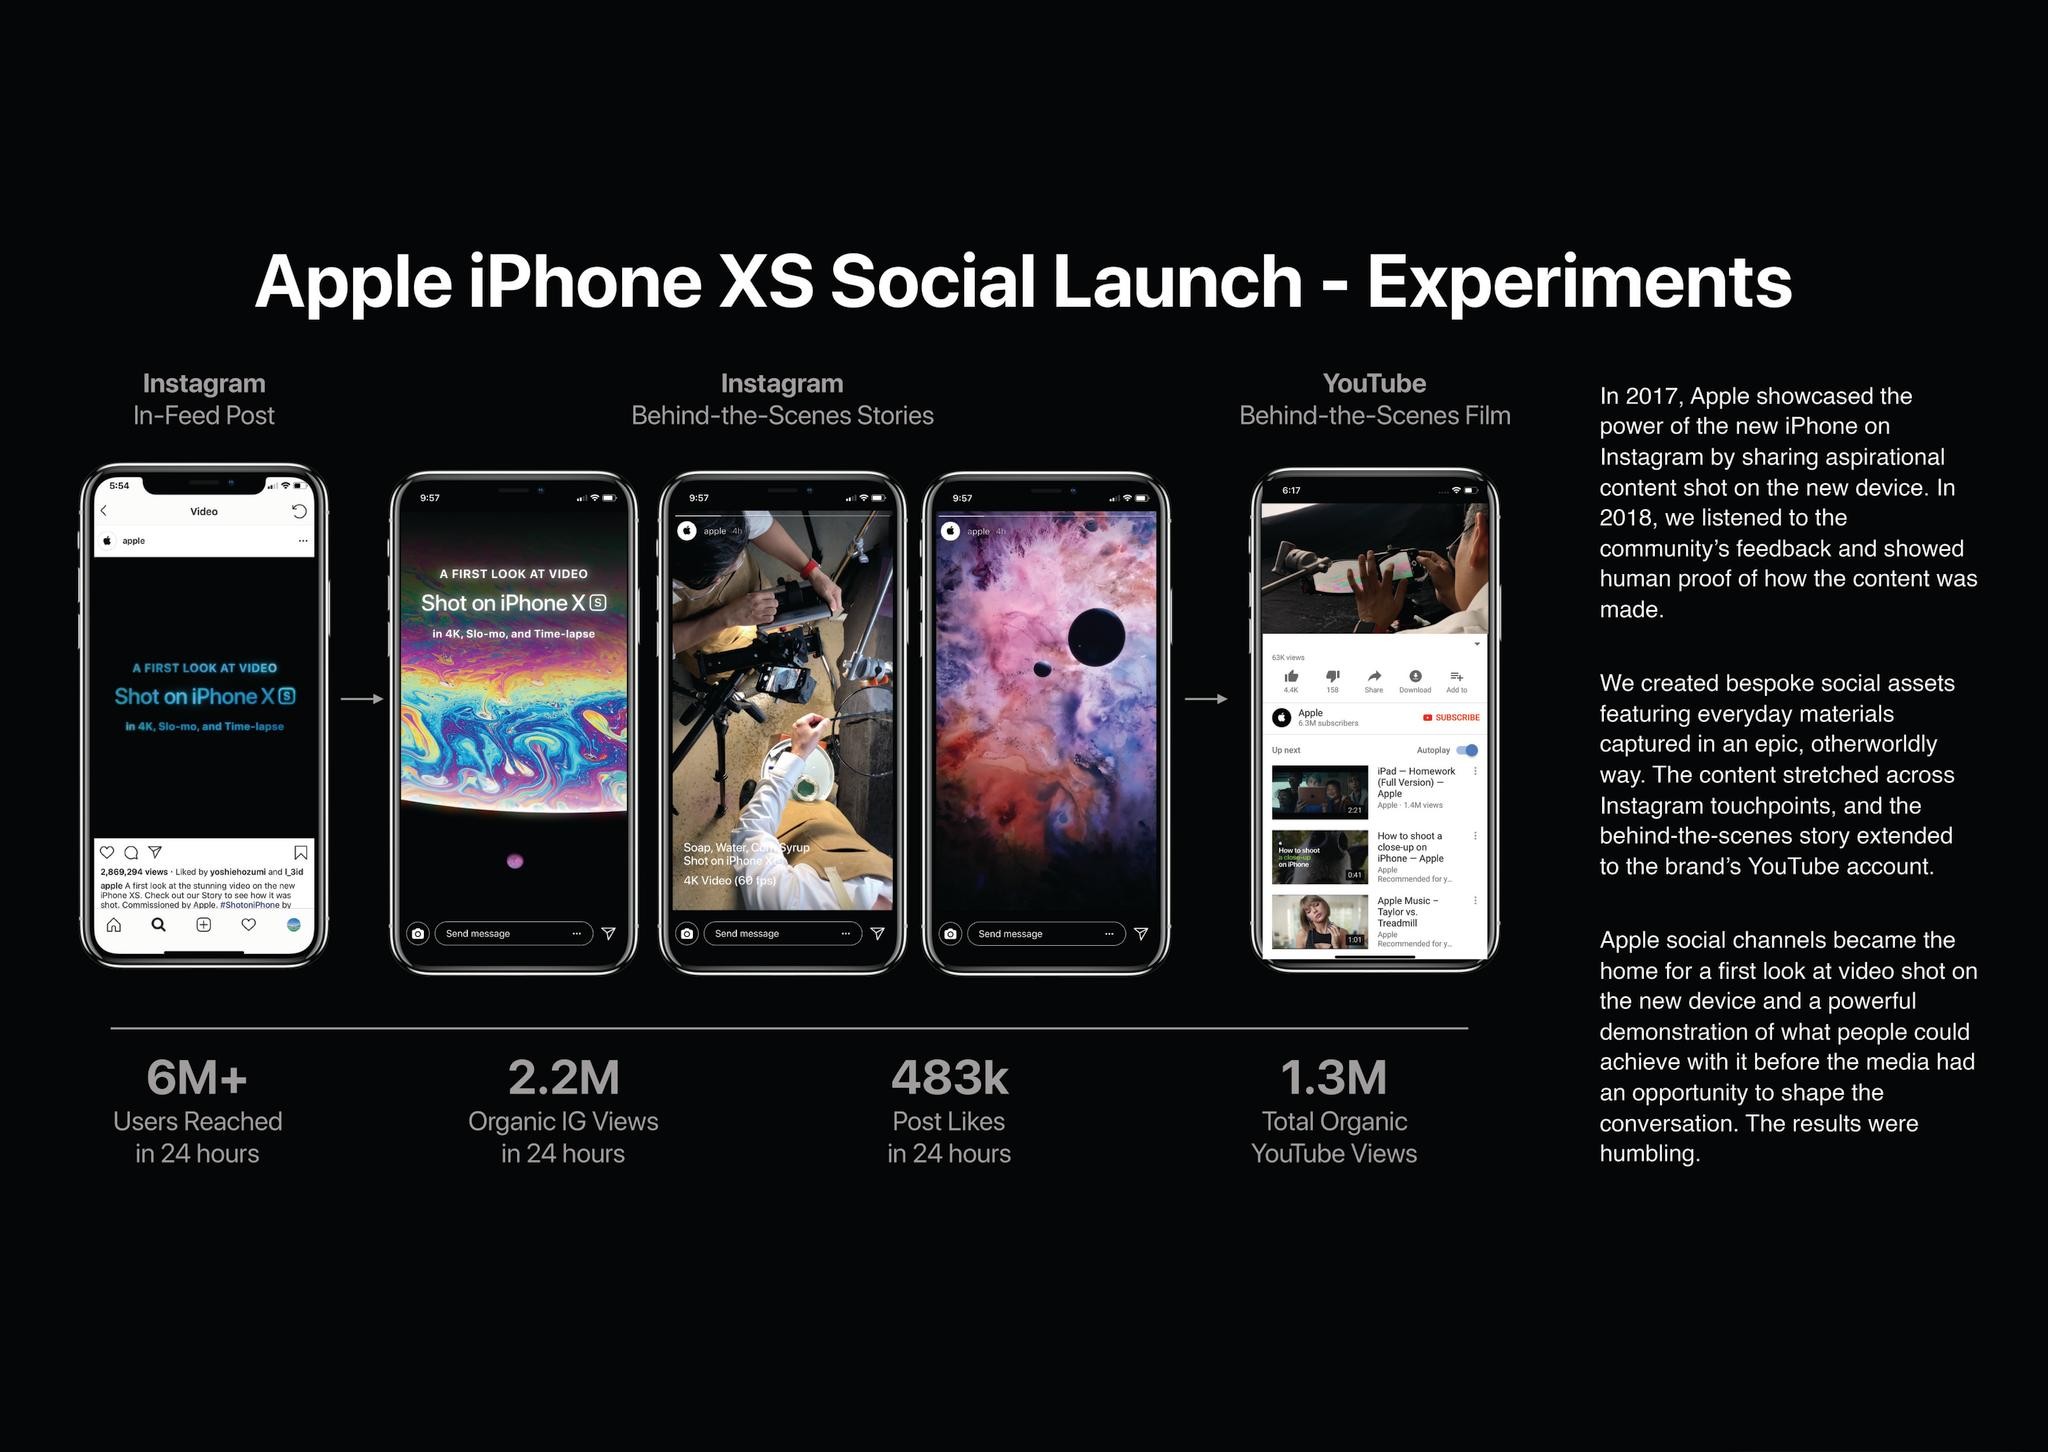 @apple - Experiments